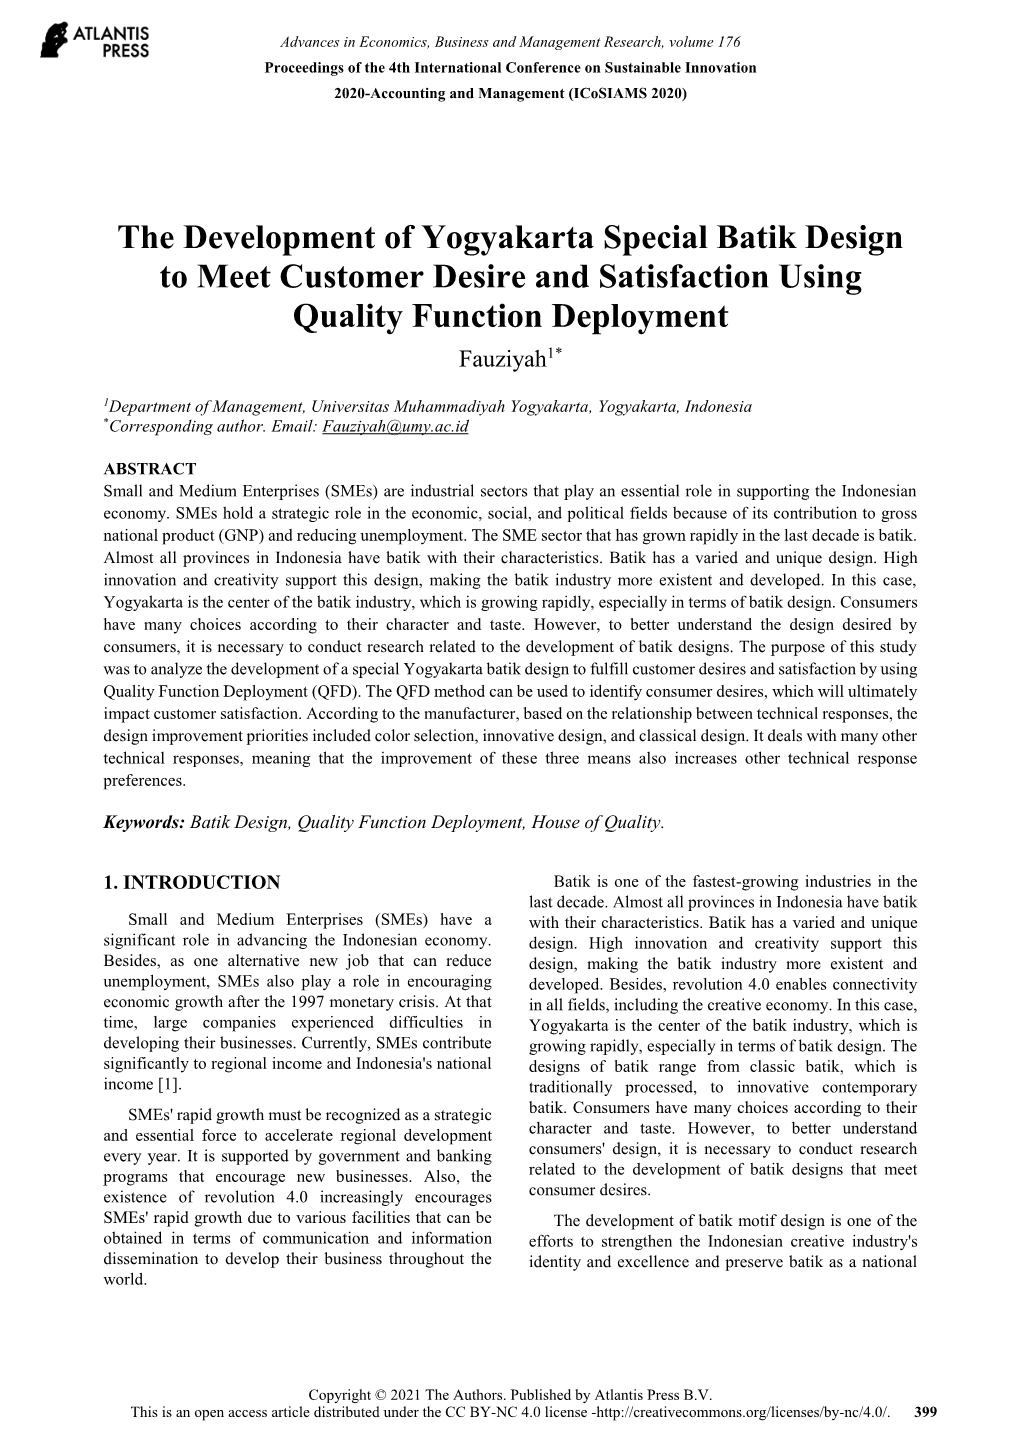 The Development of Yogyakarta Special Batik Design to Meet Customer Desire and Satisfaction Using Quality Function Deployment Fauziyah1*